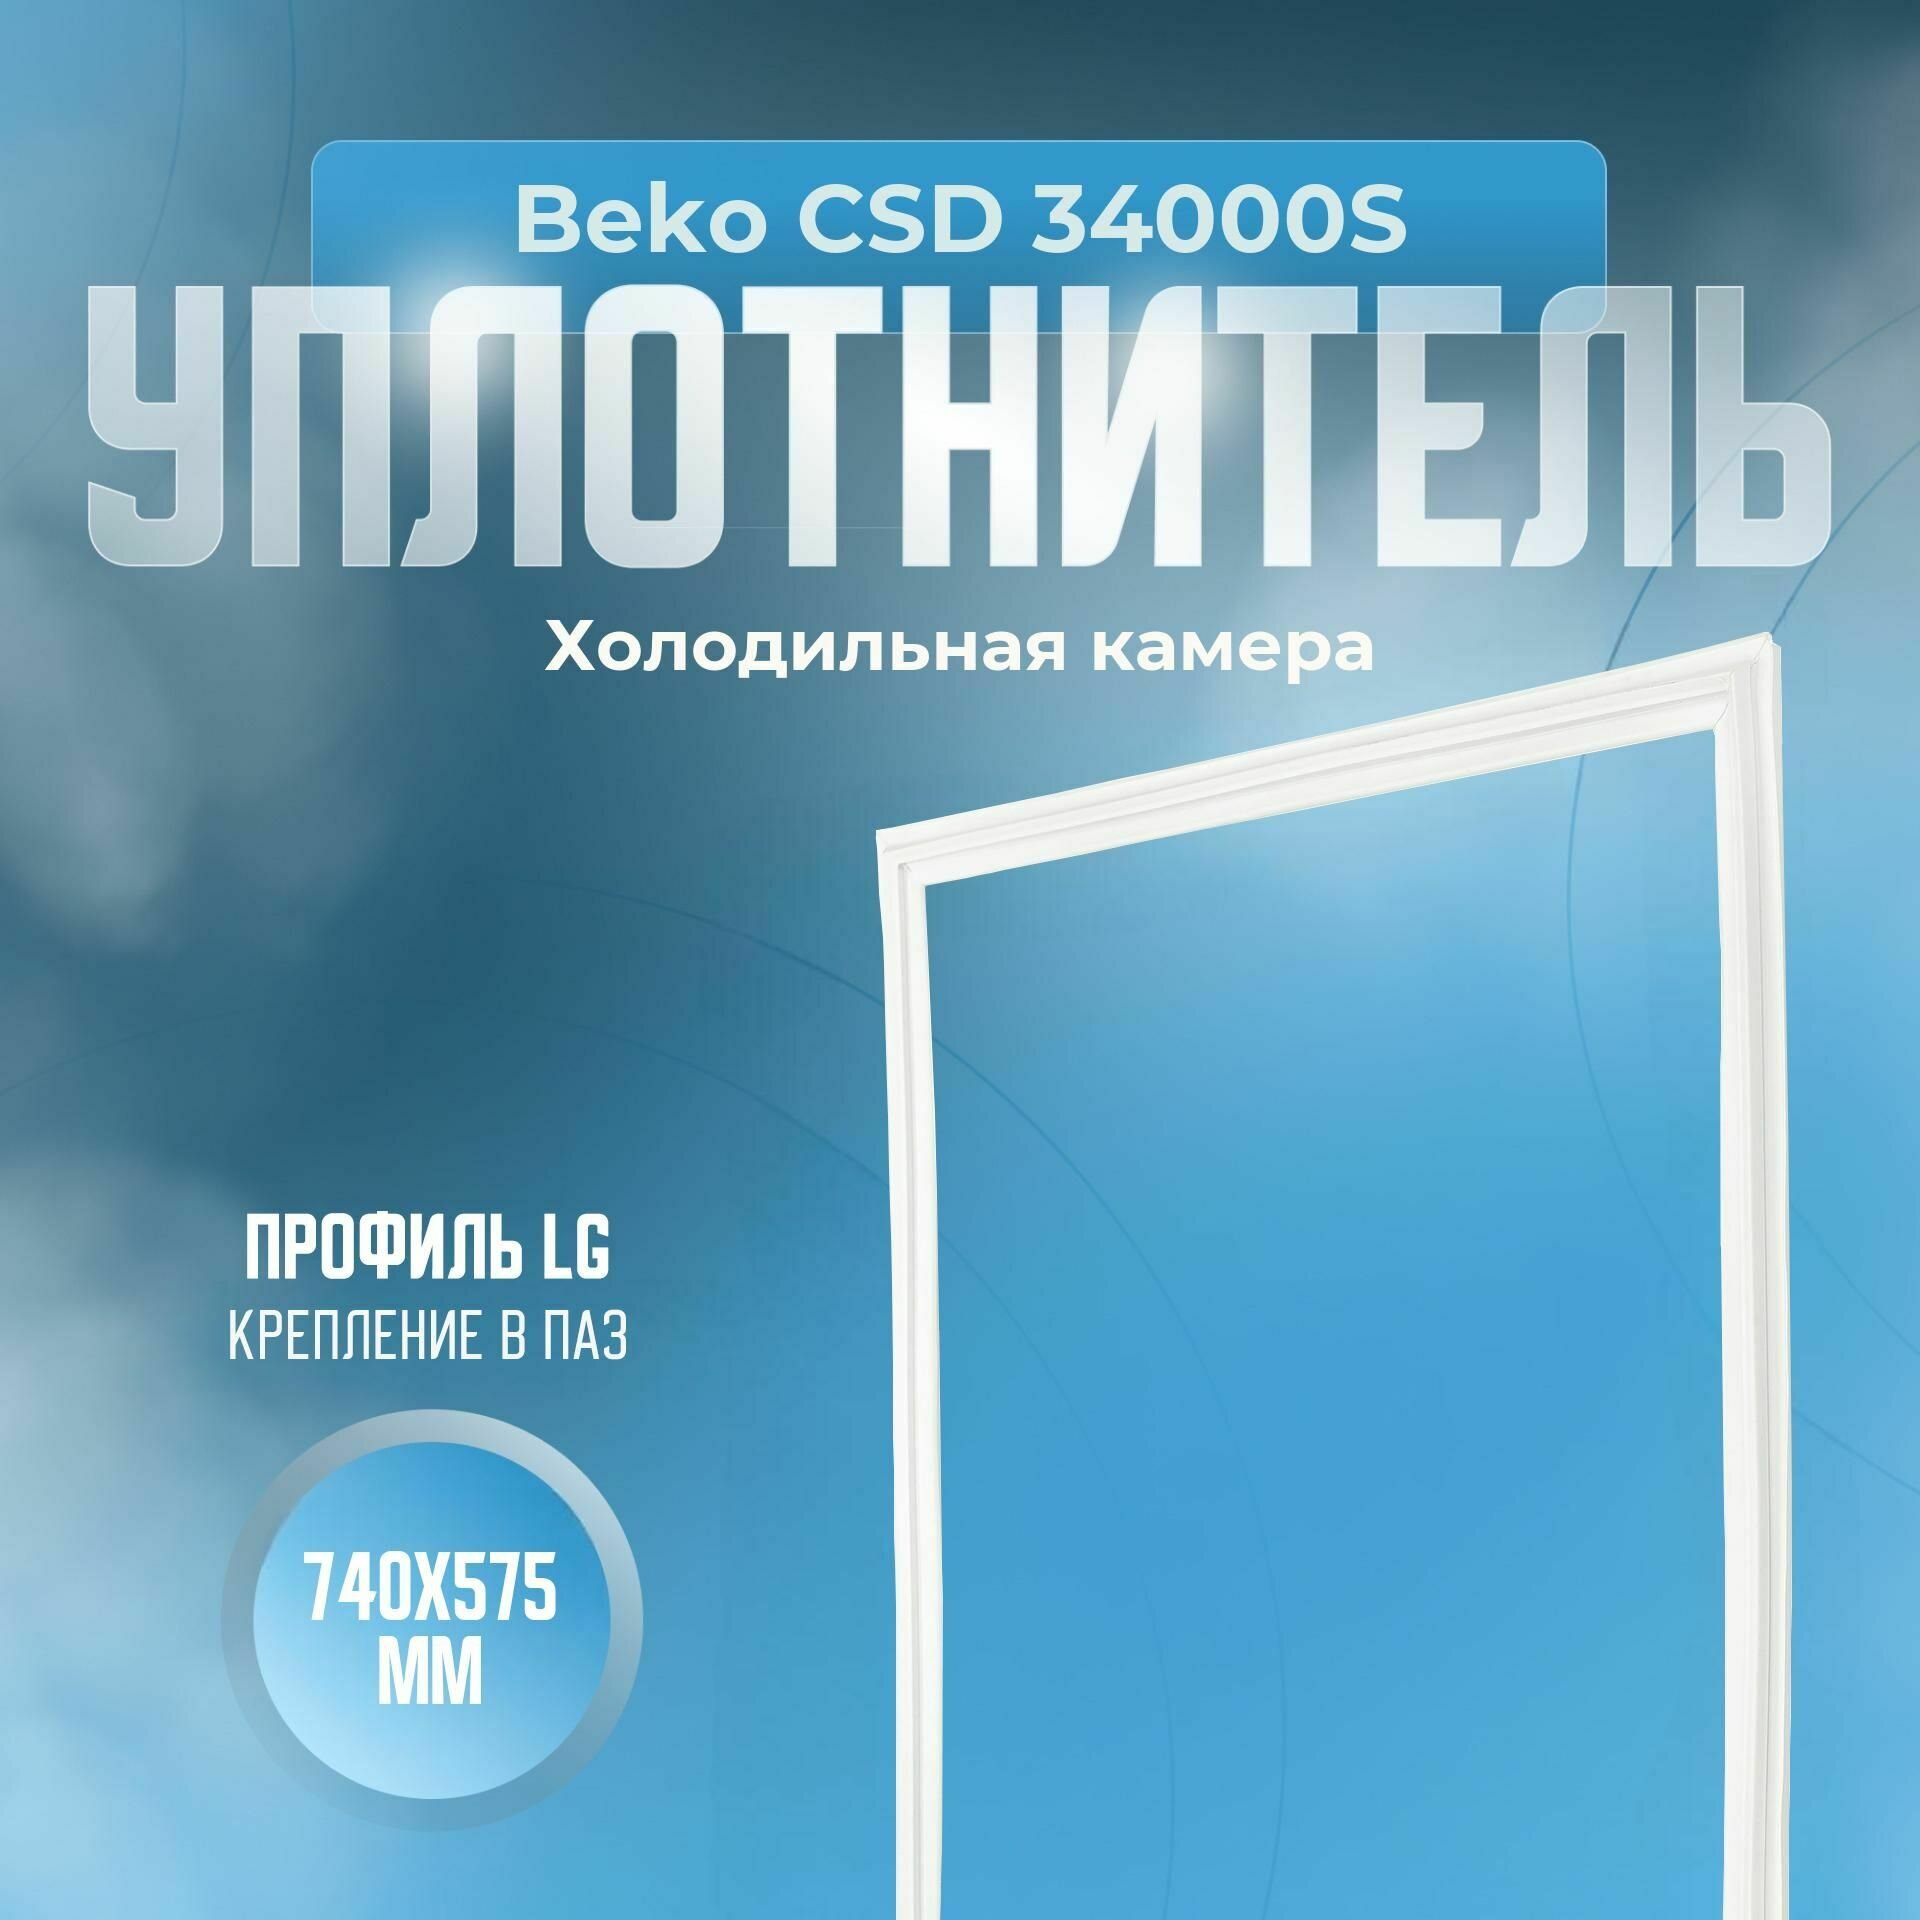 Уплотнитель Beko CSD 34000S. х. к, Размер - 740х575 мм. LG